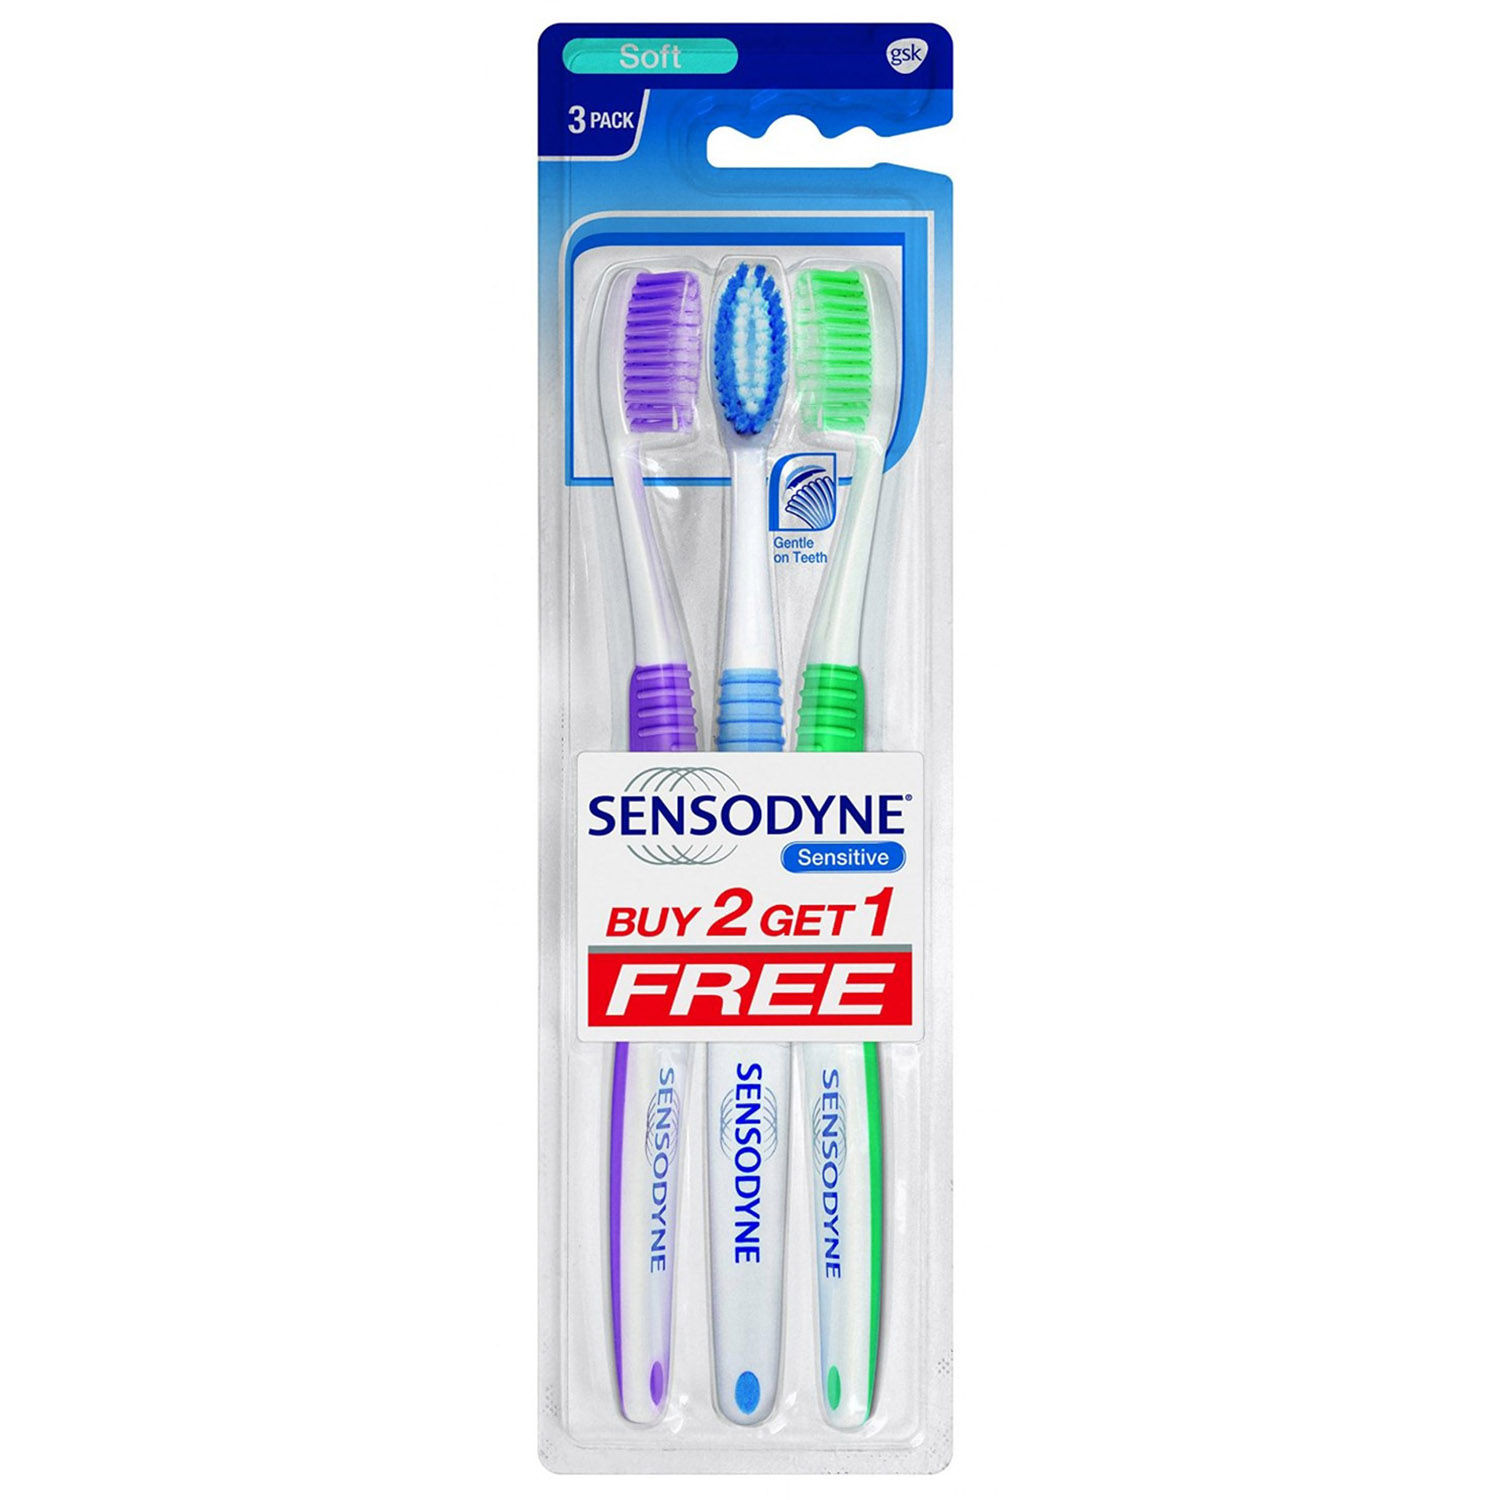 Buy Sensodyne Sensitive Soft Toothbrush, Buy 2 Get 1 Free Online